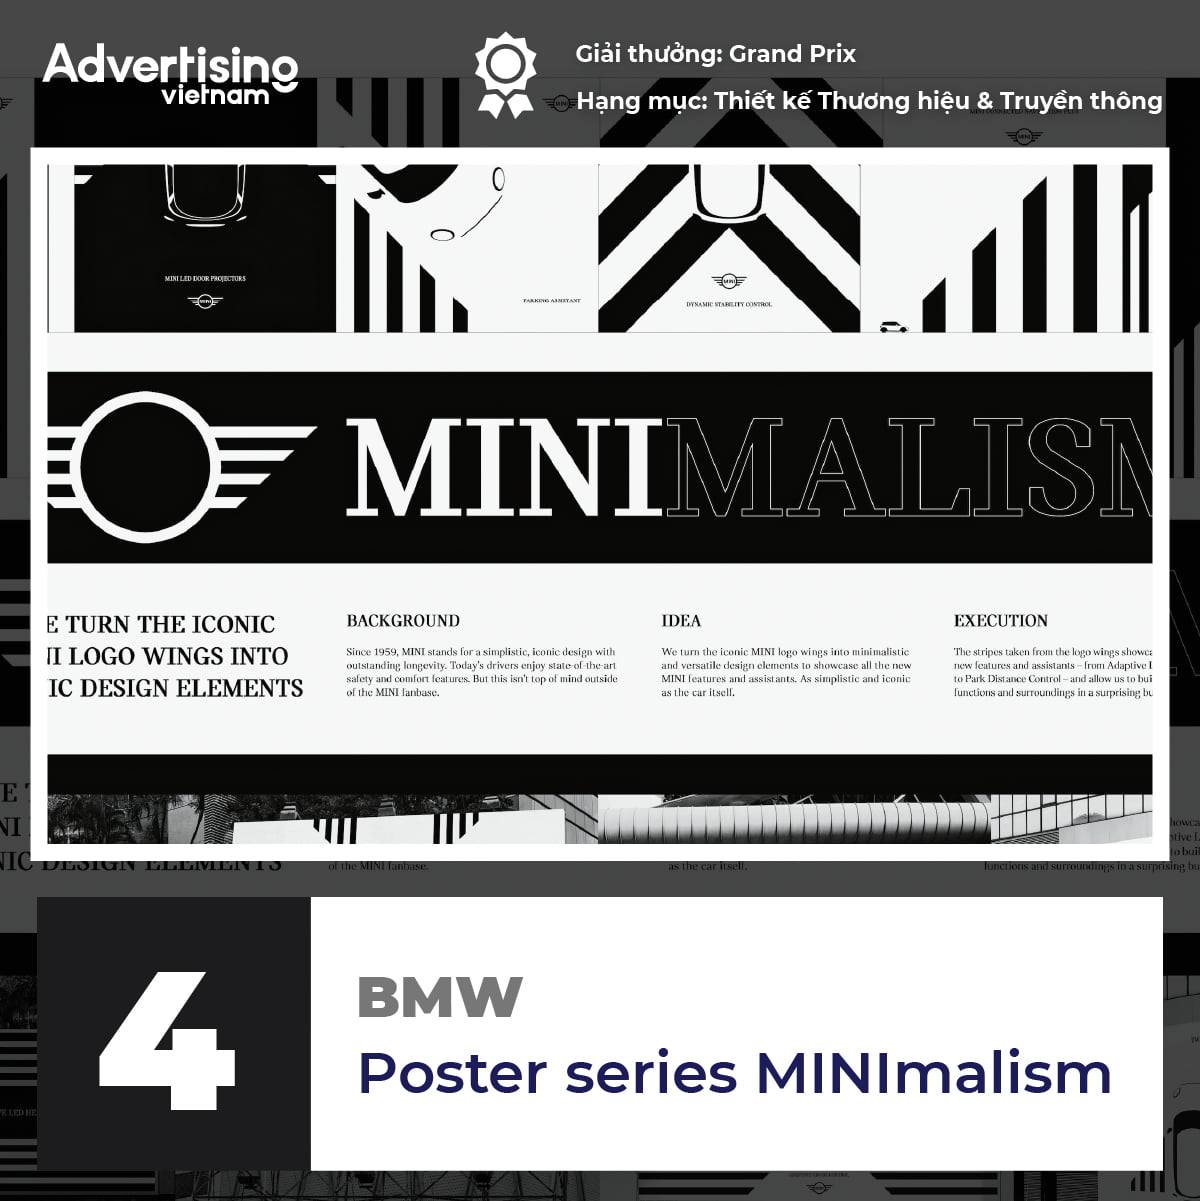 BMW Poster series MINImalism